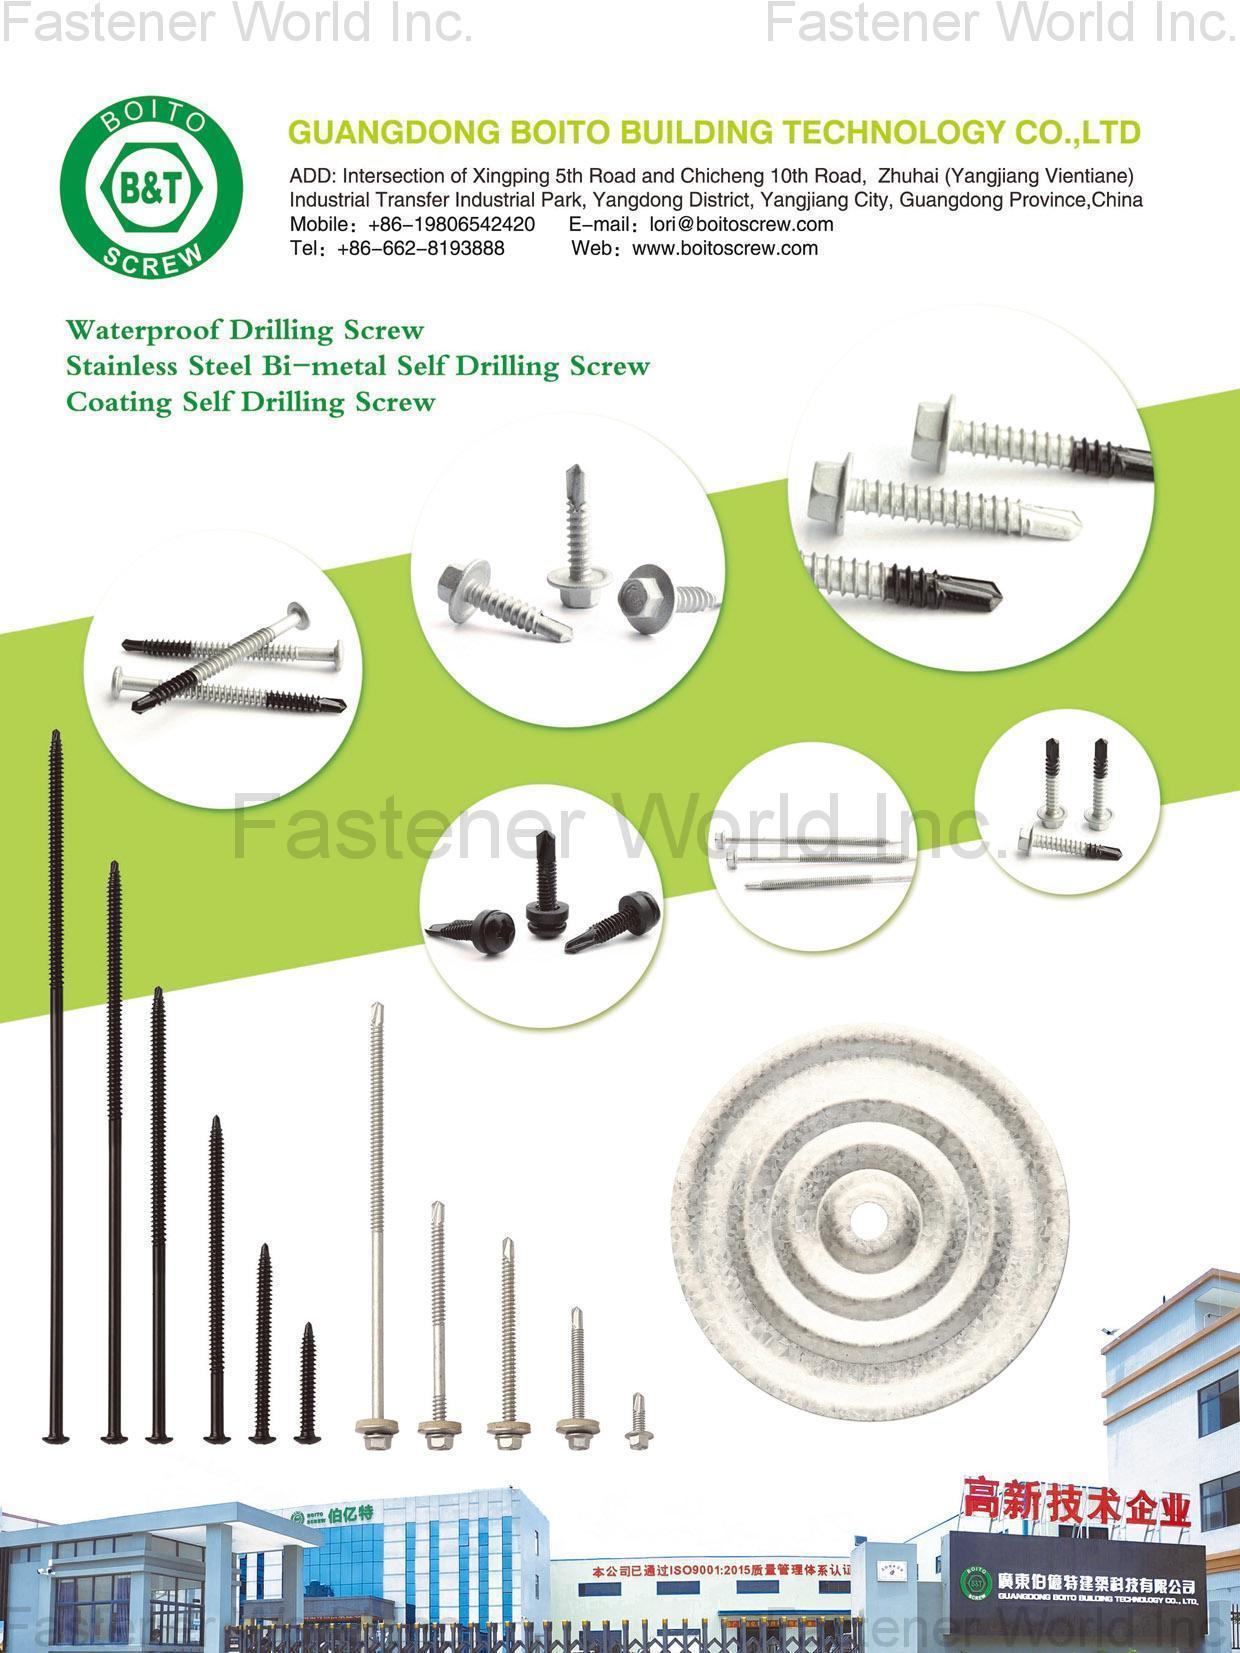 GUANGDONG BOITO CONSTRUCTION TECHNOLOGY CO., LTD.  , Waterproof Drilling Screws, Stainless Steel Bi-metal Self Drilling Screws, Coating Self Drilling Screws